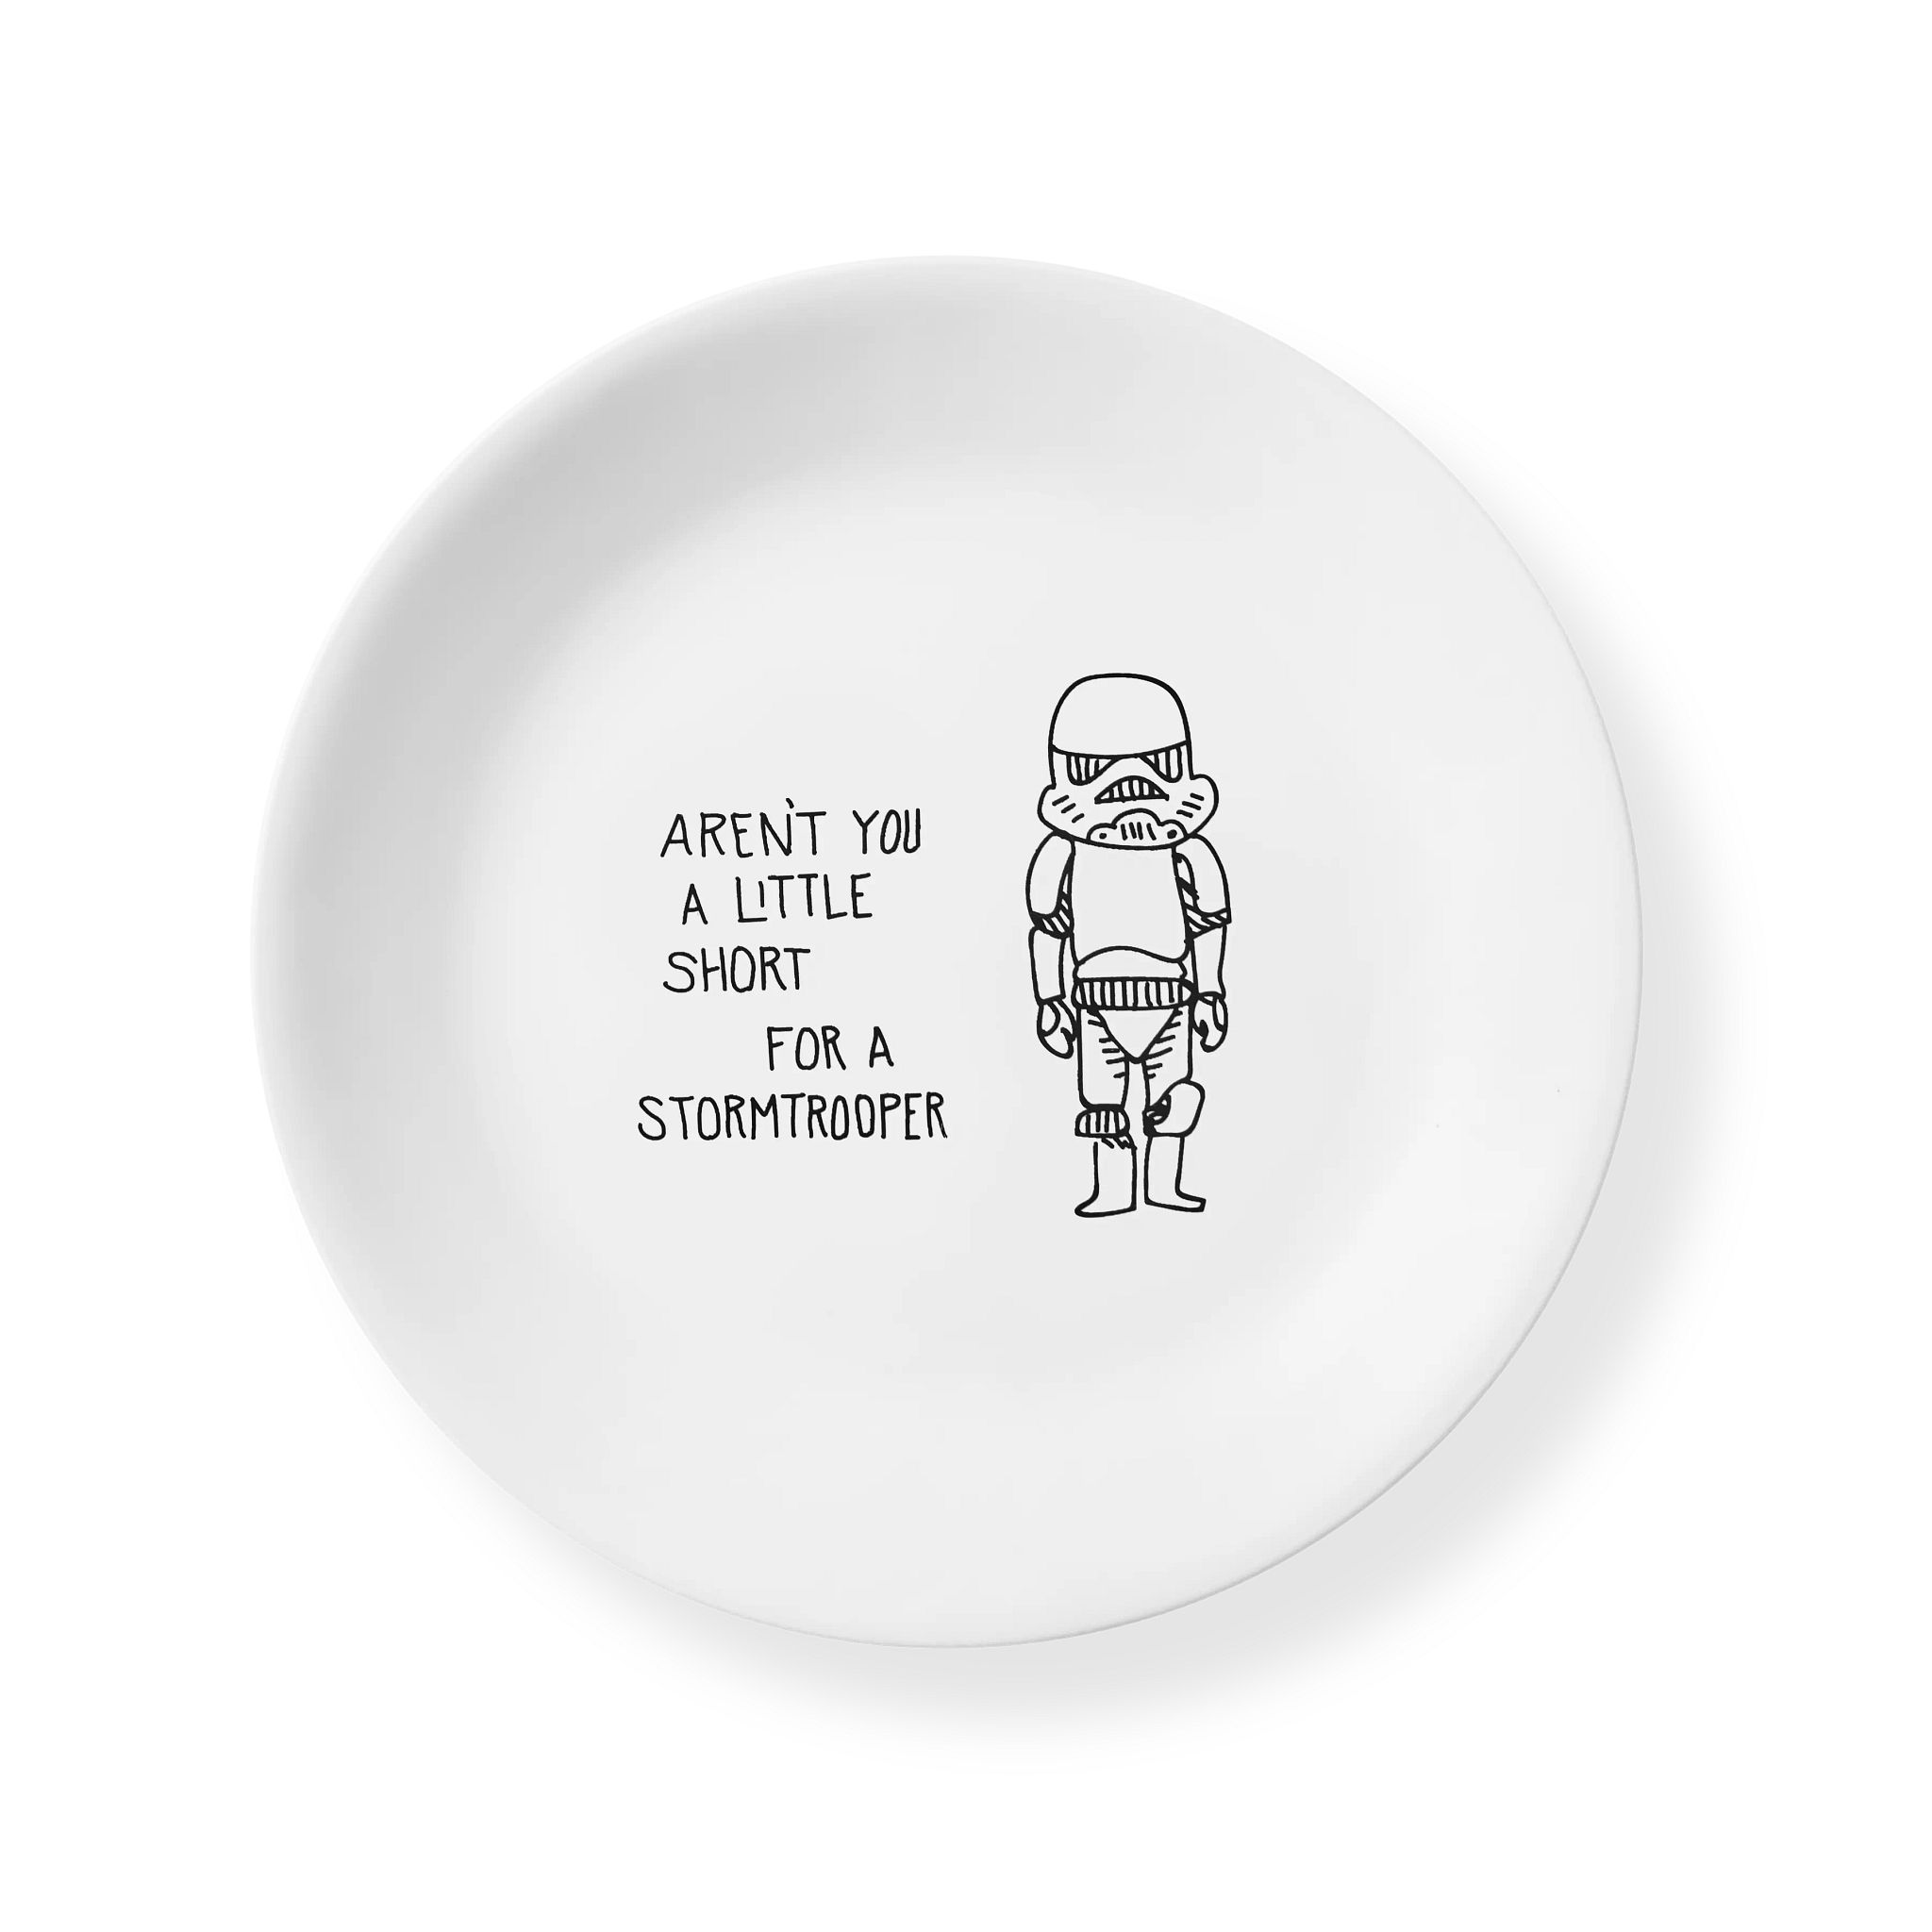 https://embed.widencdn.net/img/worldkitchen/csosdv0vmj/2048px/1141256_CO_Tabletop_Silo_Square_Stormtrooper_Lunch-Plate.jpg